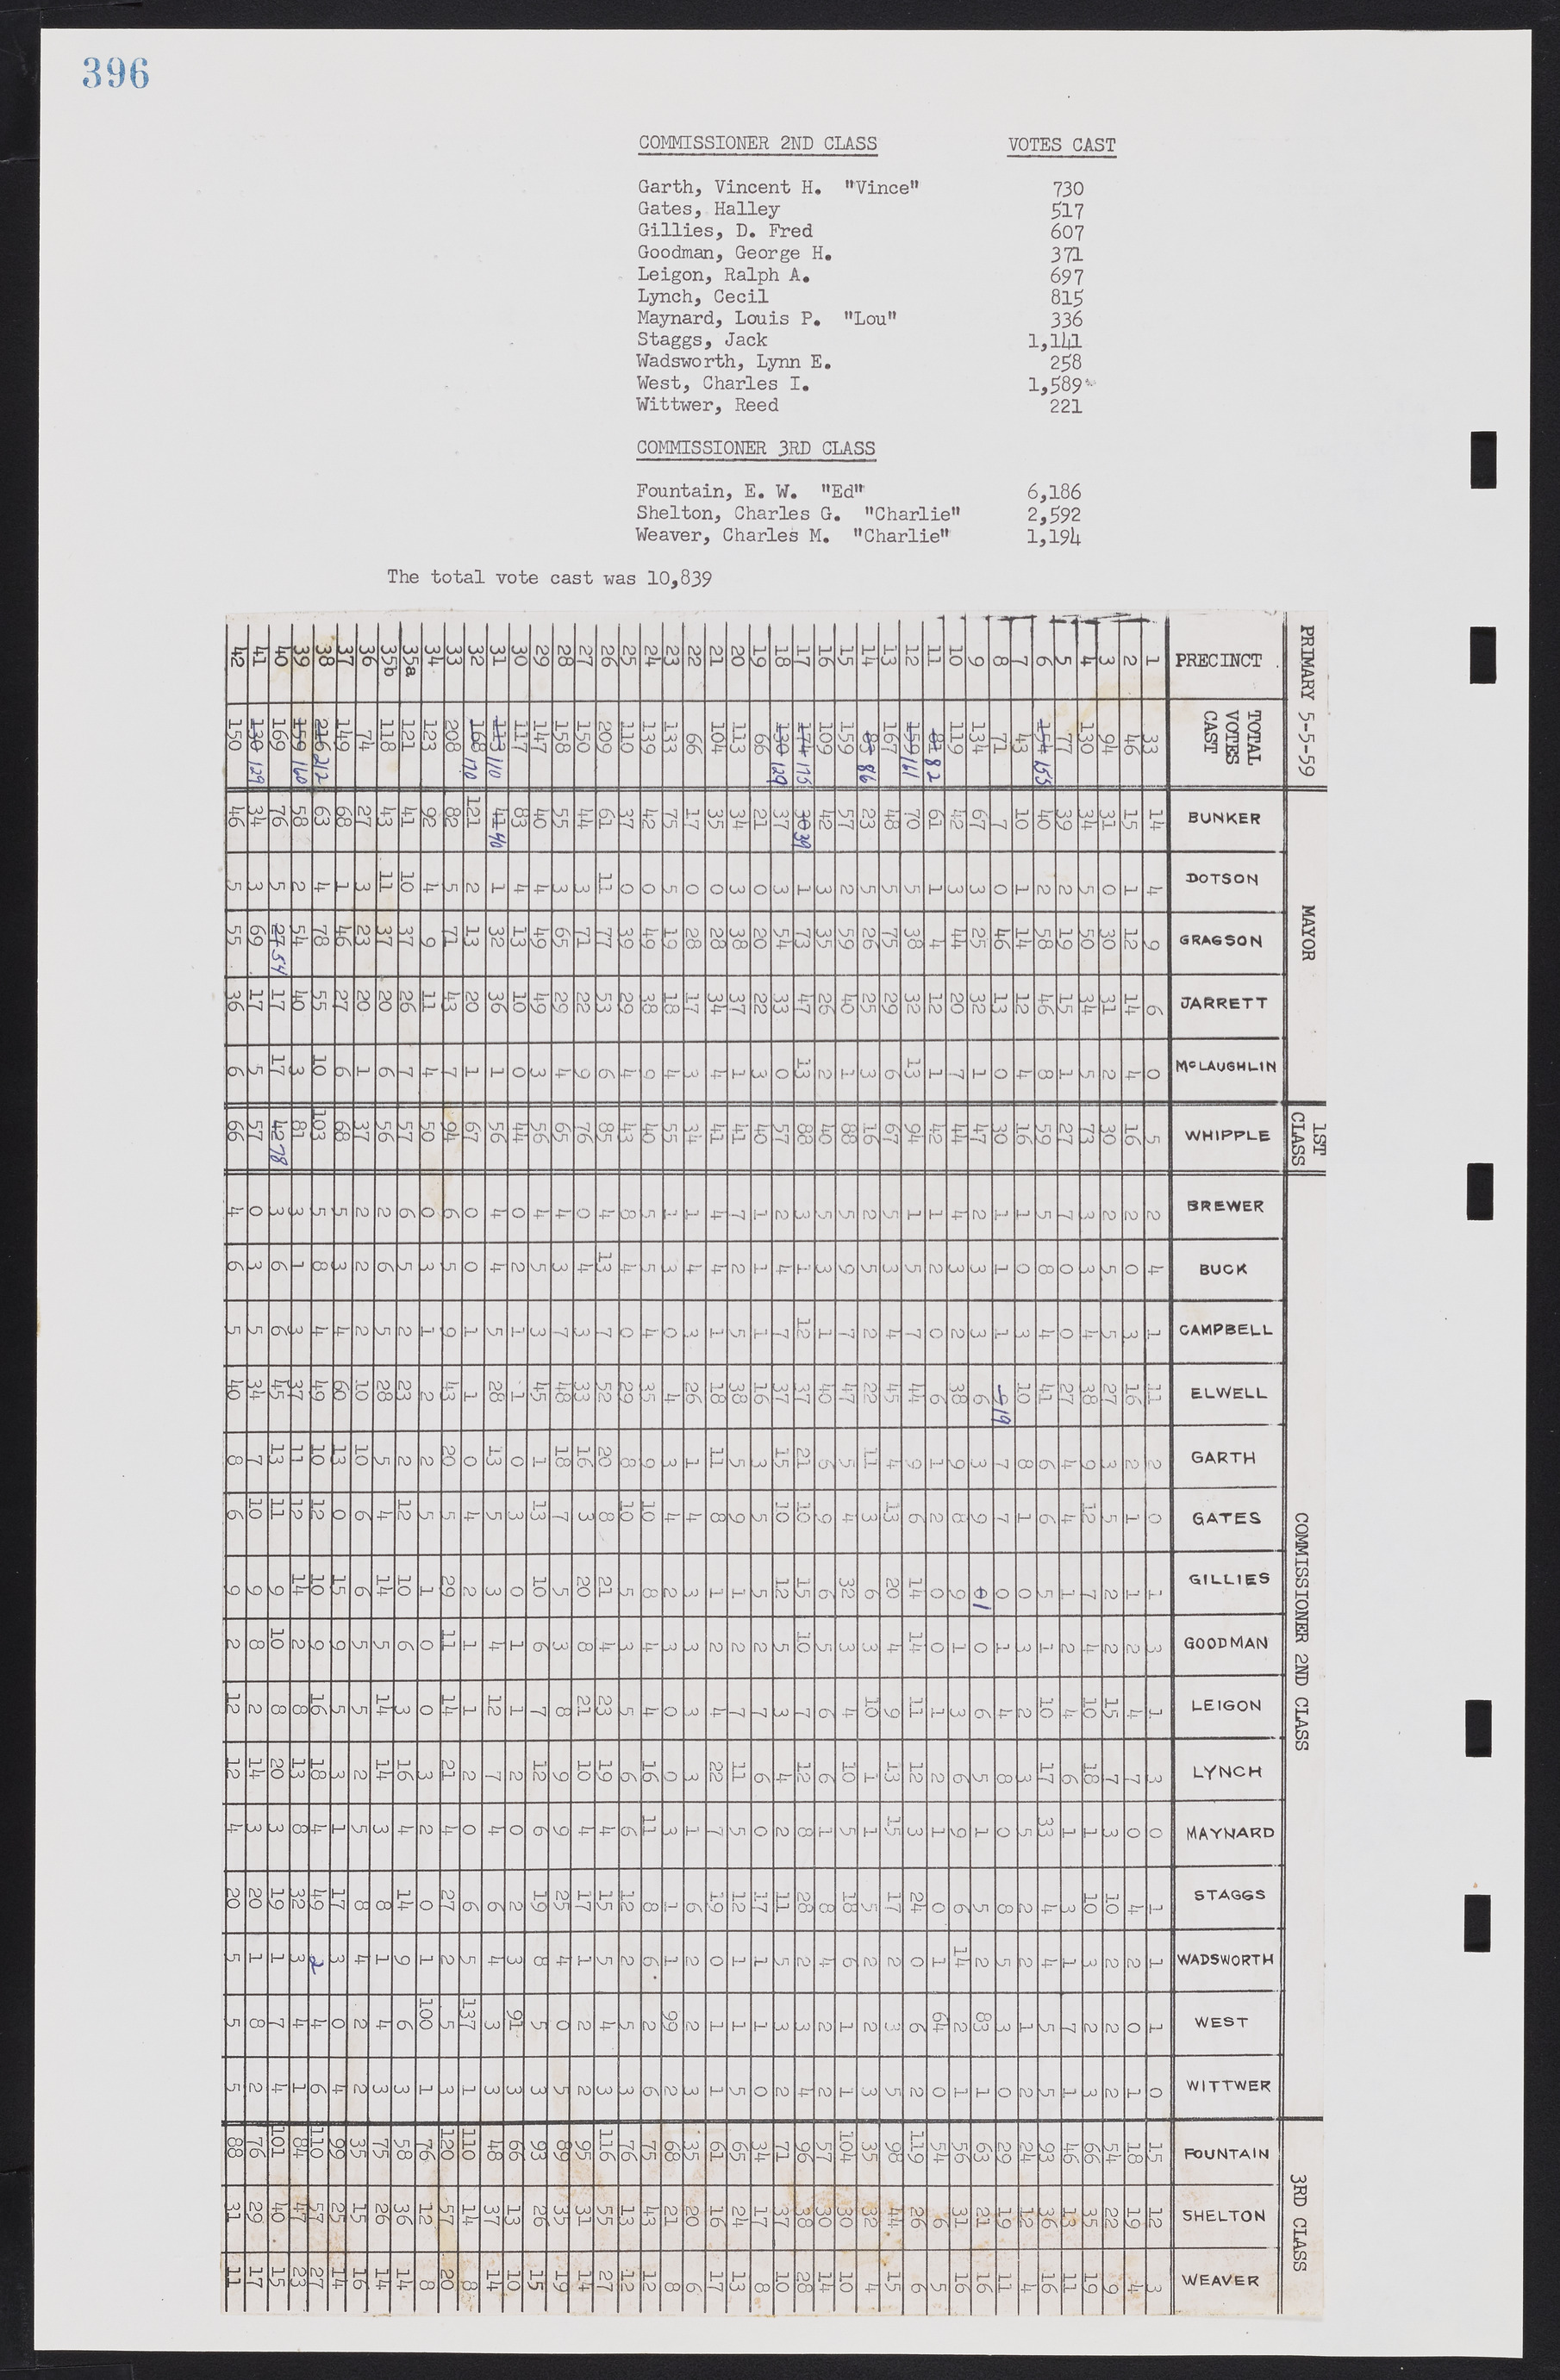 Las Vegas City Commission Minutes, November 20, 1957 to December 2, 1959, lvc000011-432